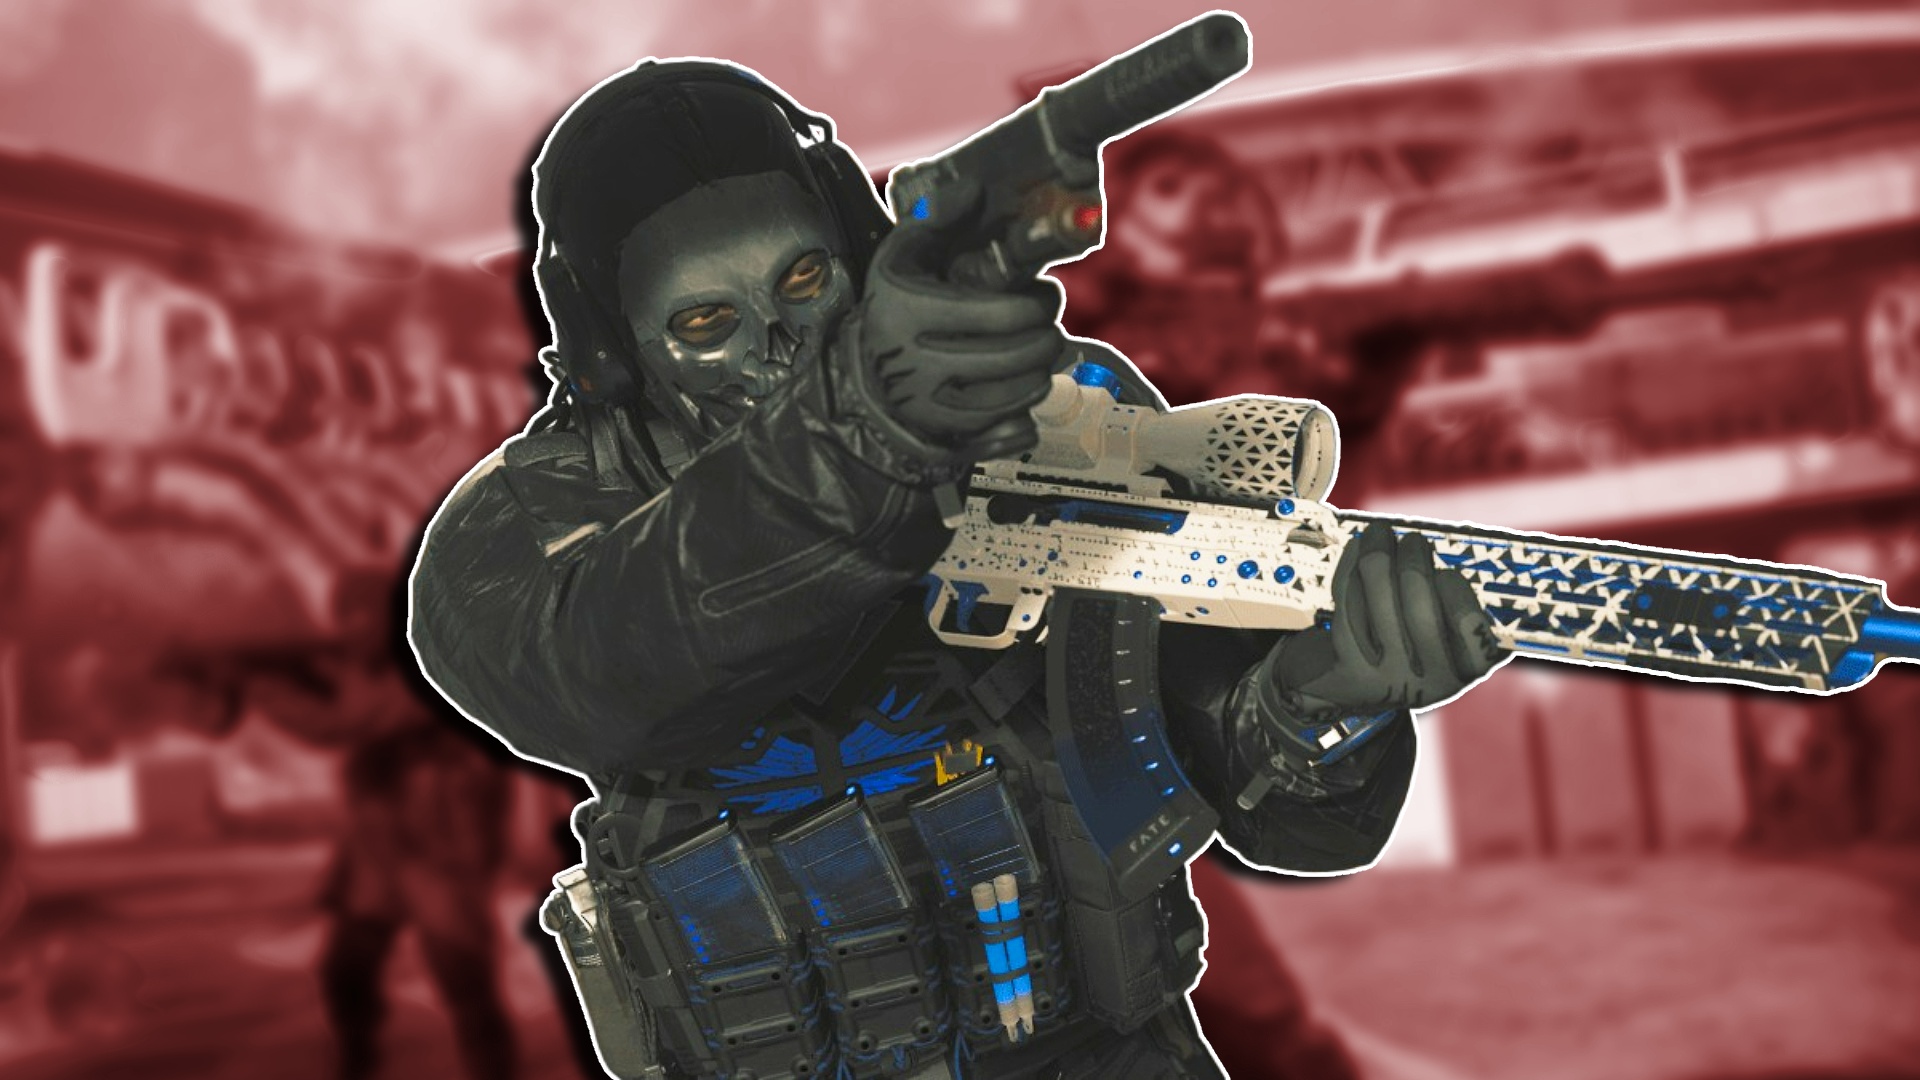 Modern Warfare 3 Guide - List of All Operators & How to Unlock Them